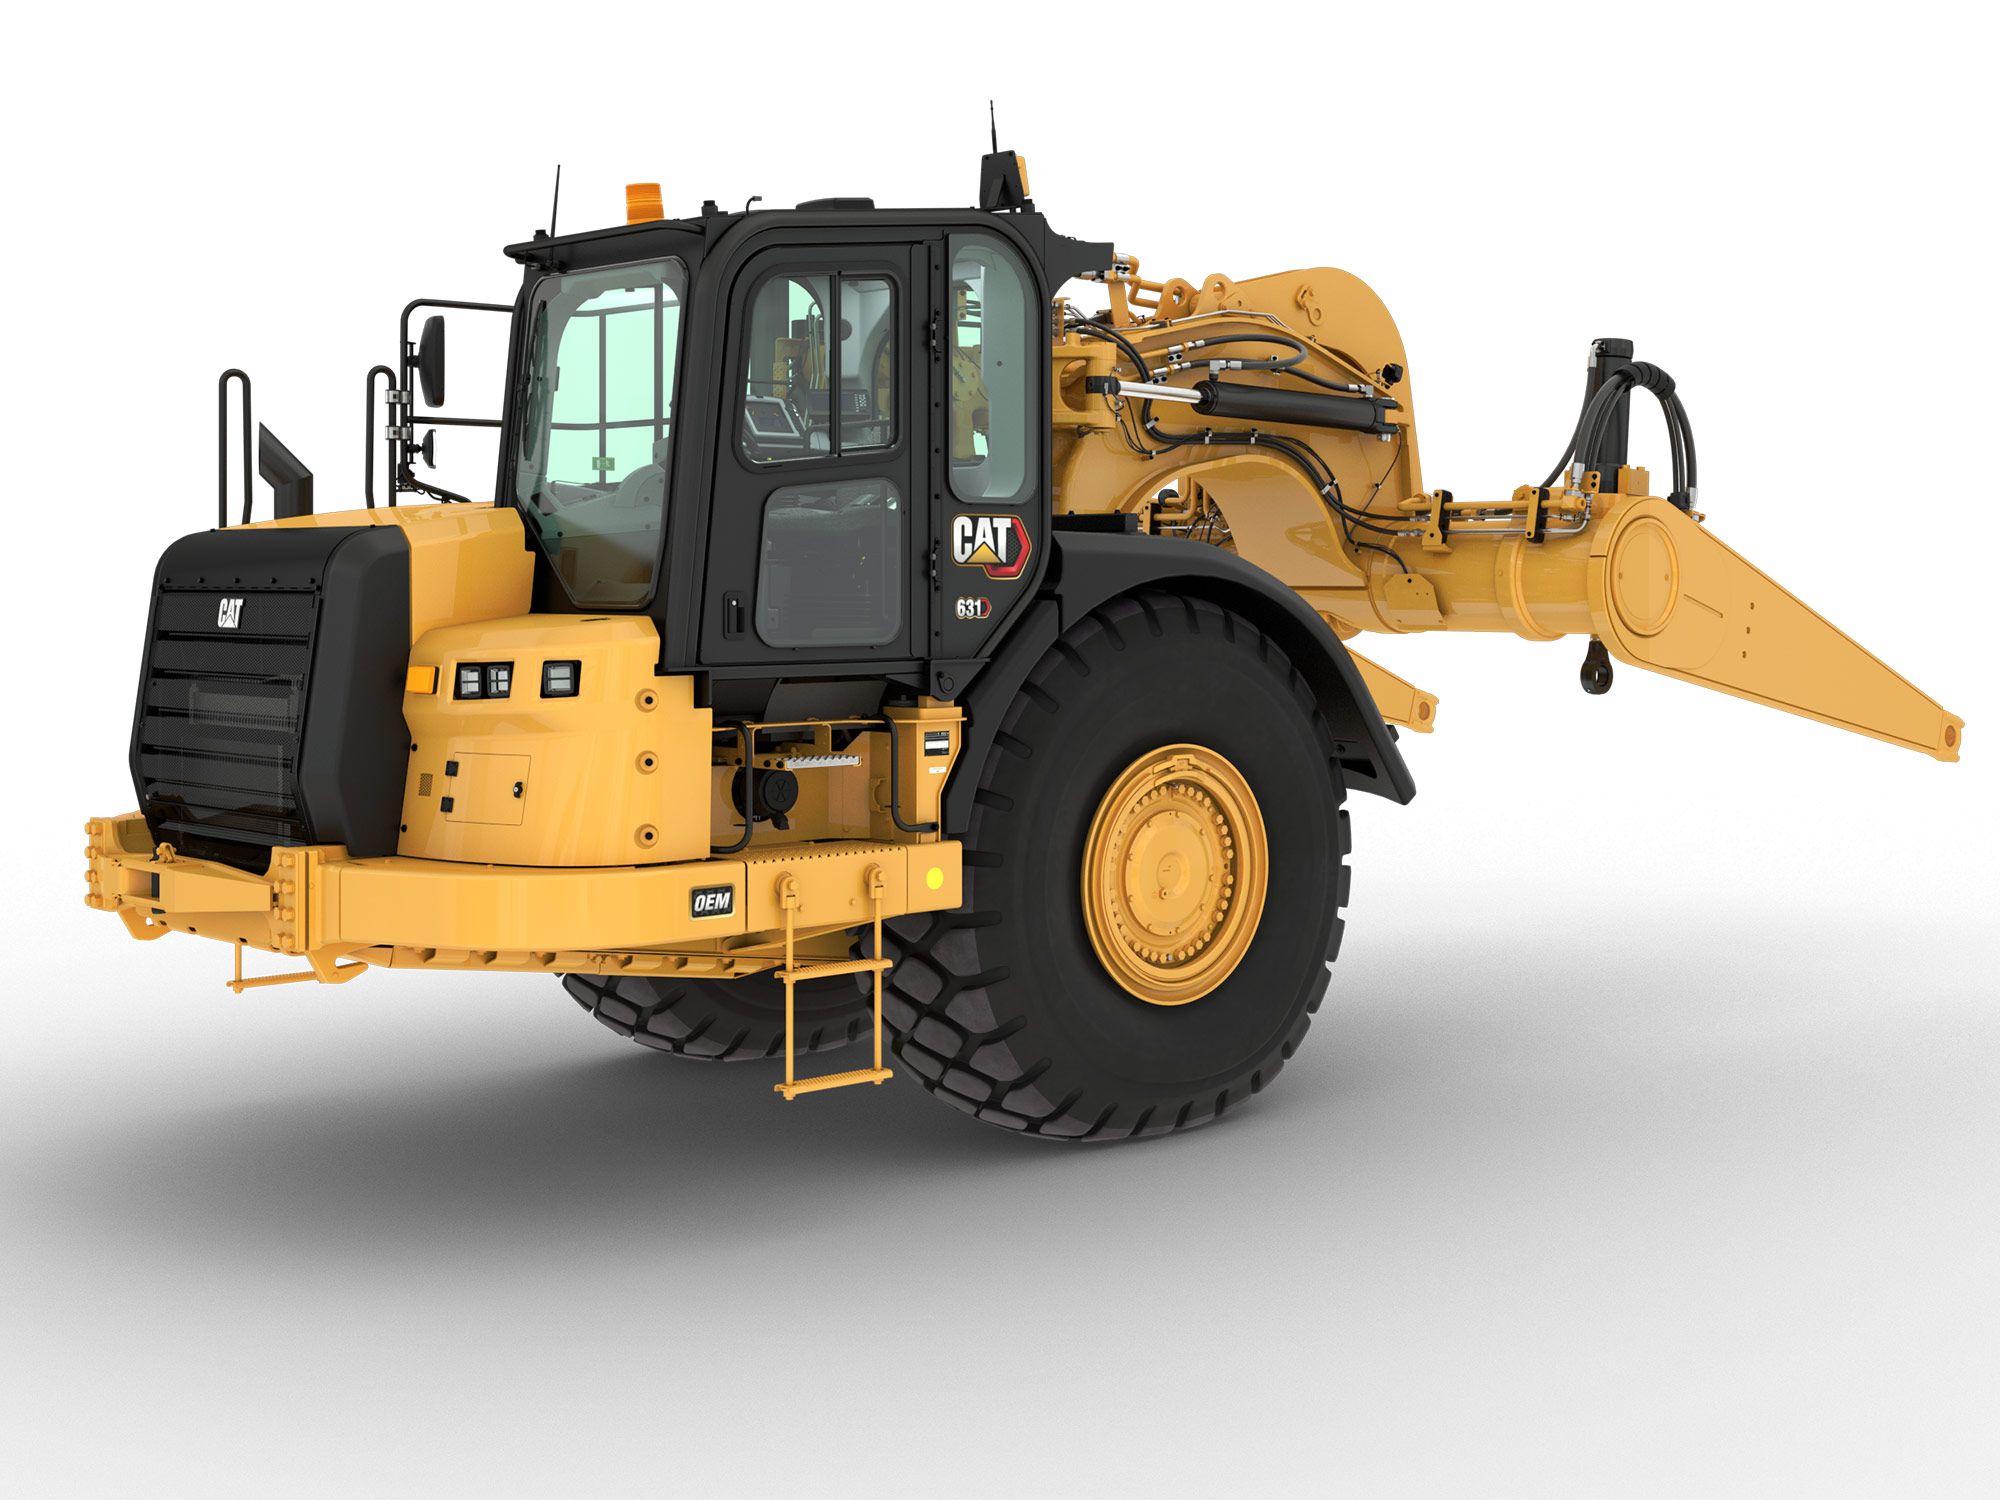 Cat 631 partial wheel tractor scraper | Cat | Caterpillar